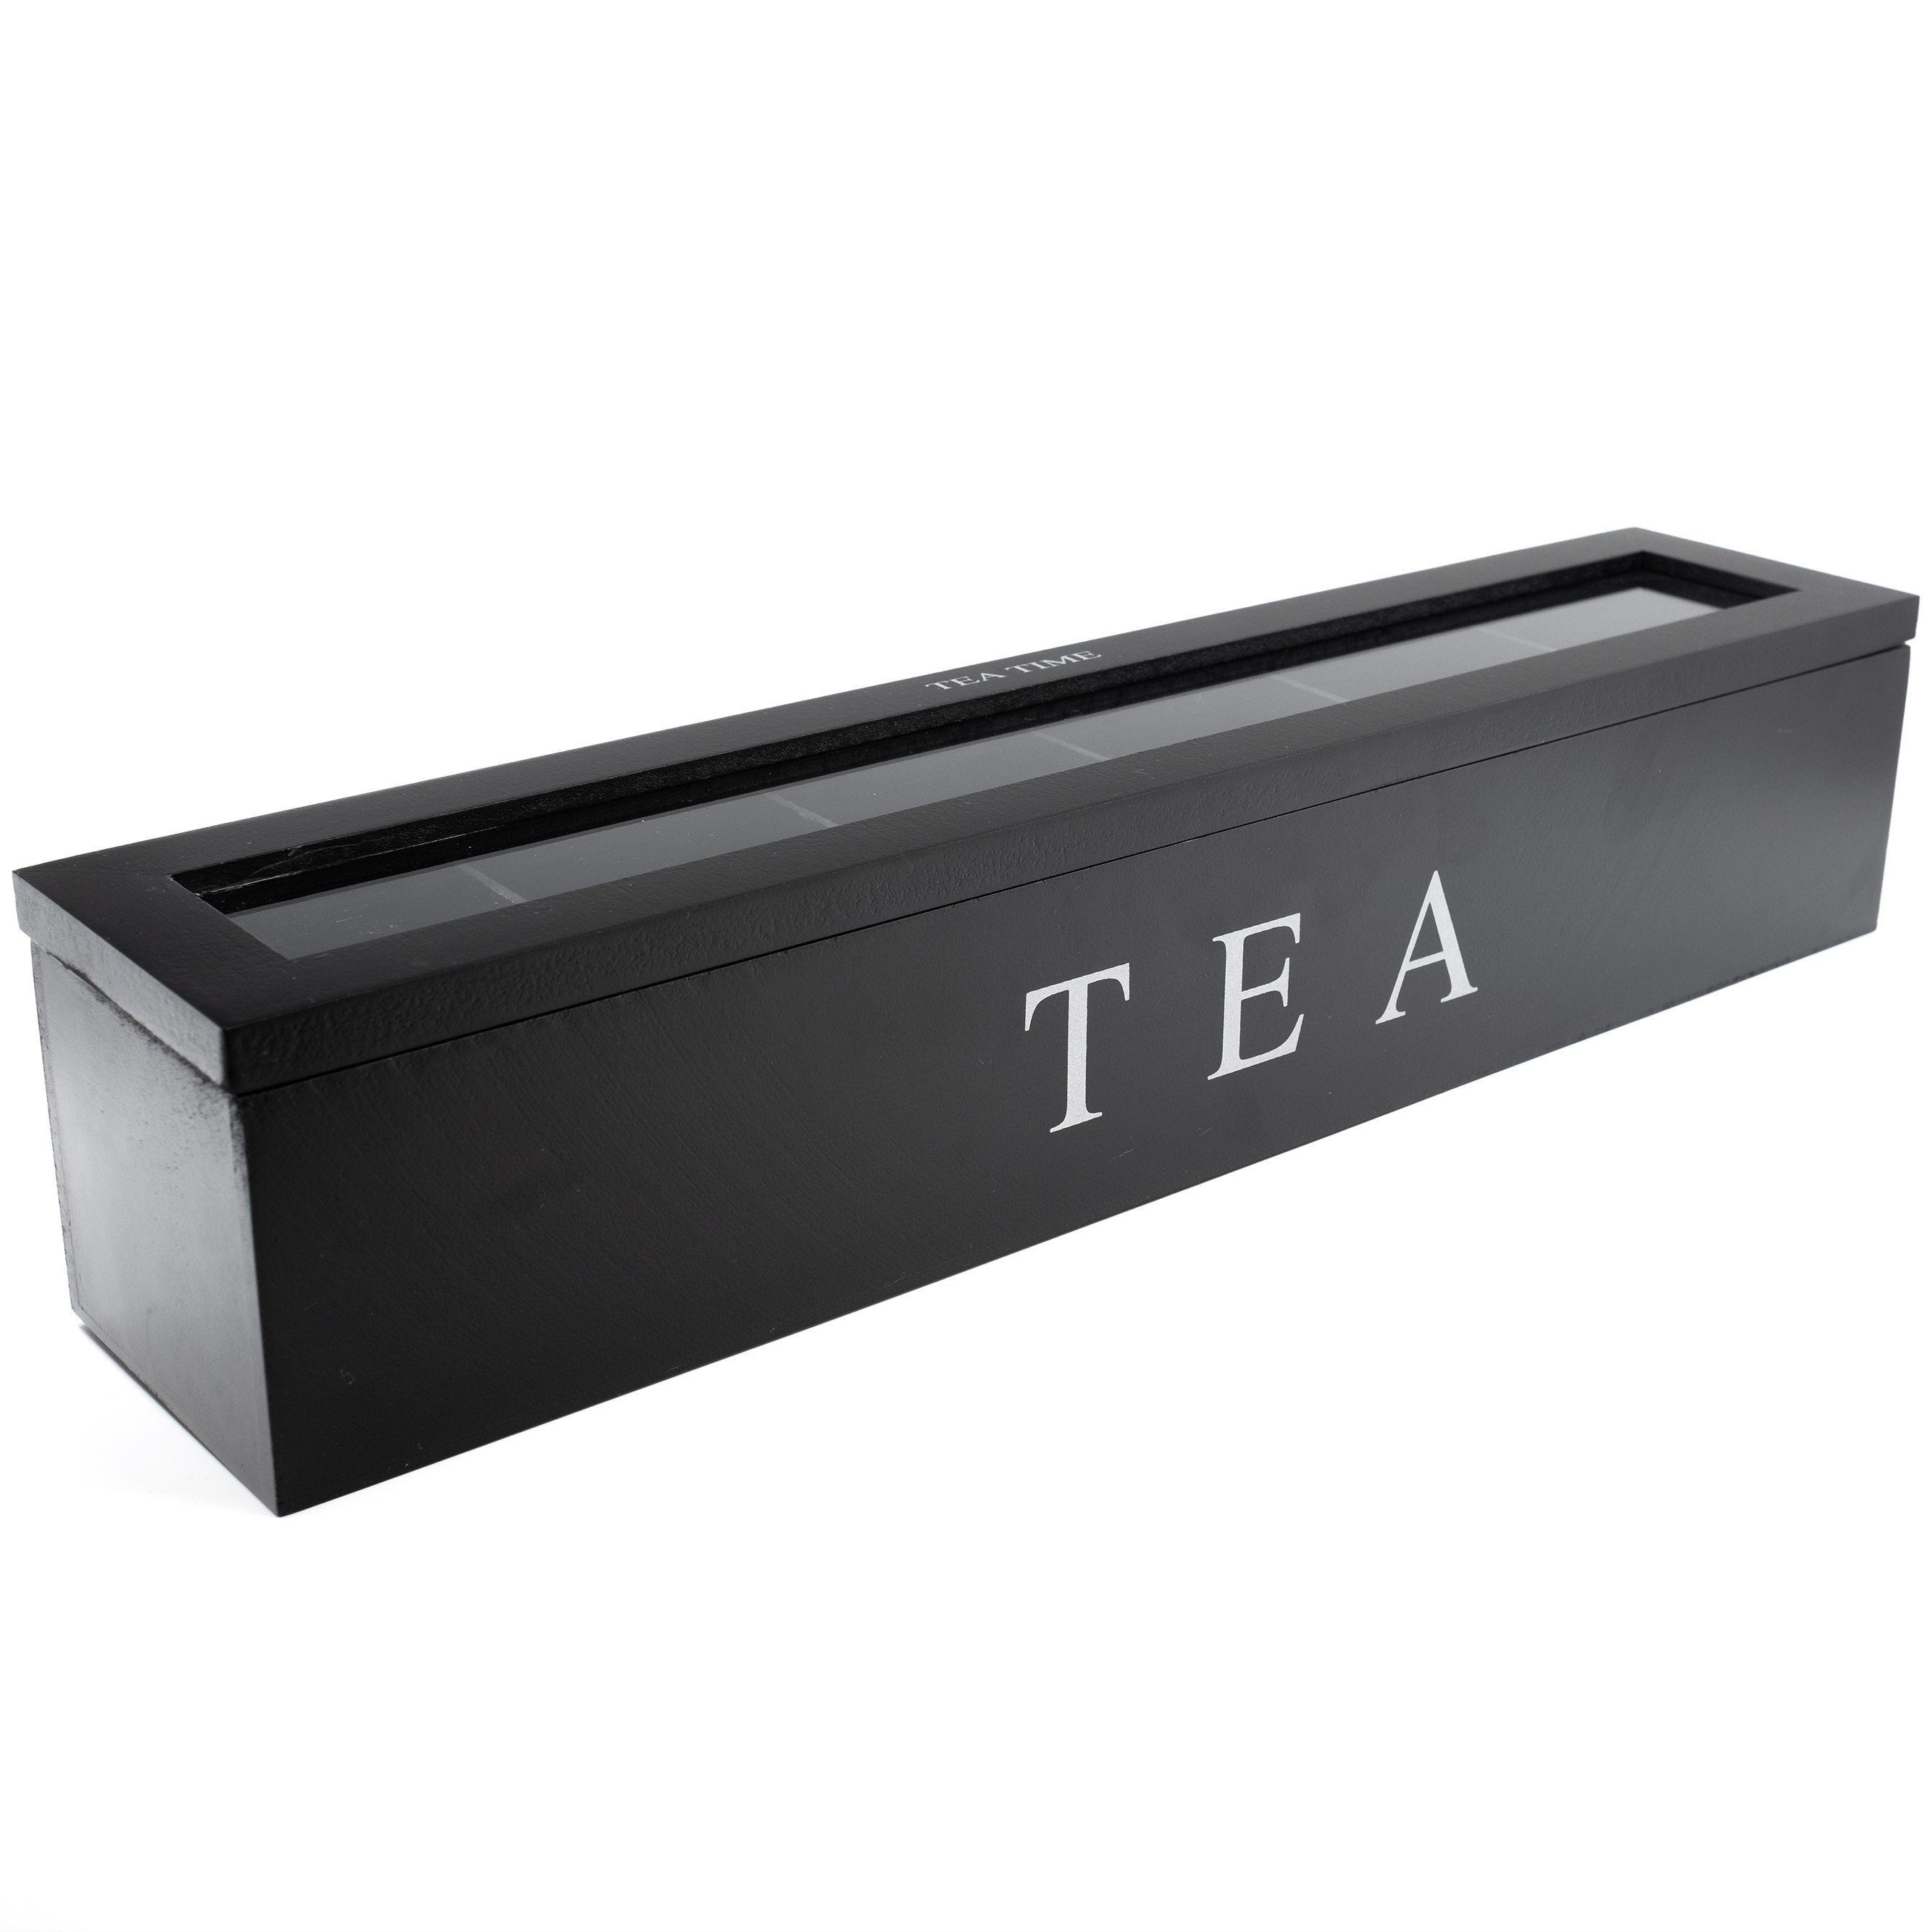 Teedose Aufbewahrung Teeregal Teebeutelbox TMV24 Tee Box, Teebox Holz Teekasten Teekiste